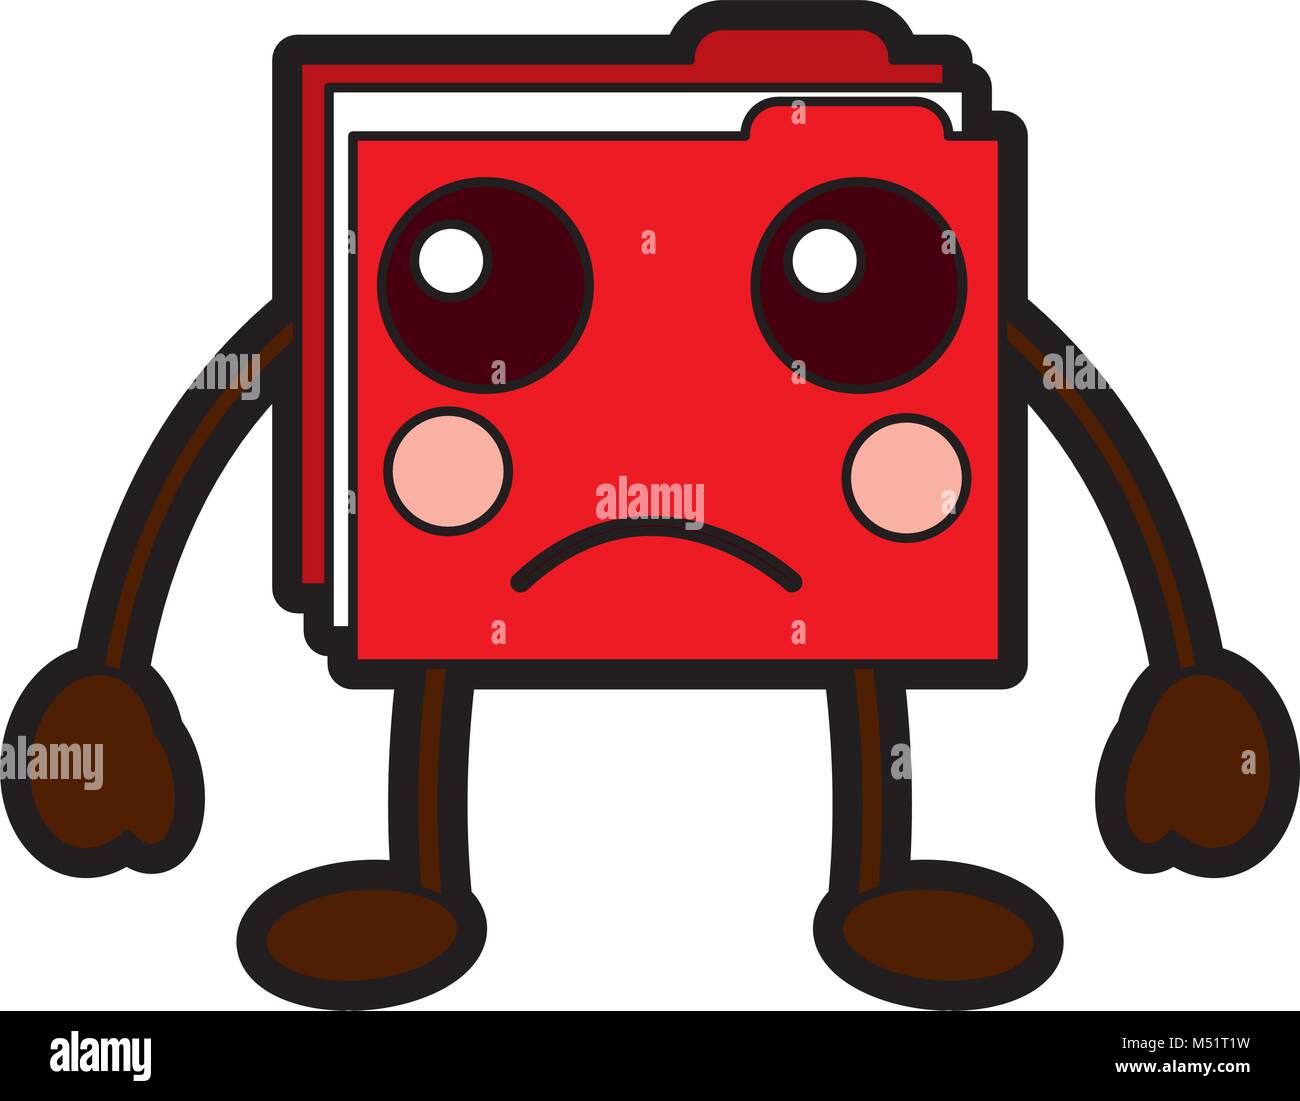 Datei Ordner traurig Emoji icon image Stock-Vektorgrafik - Alamy